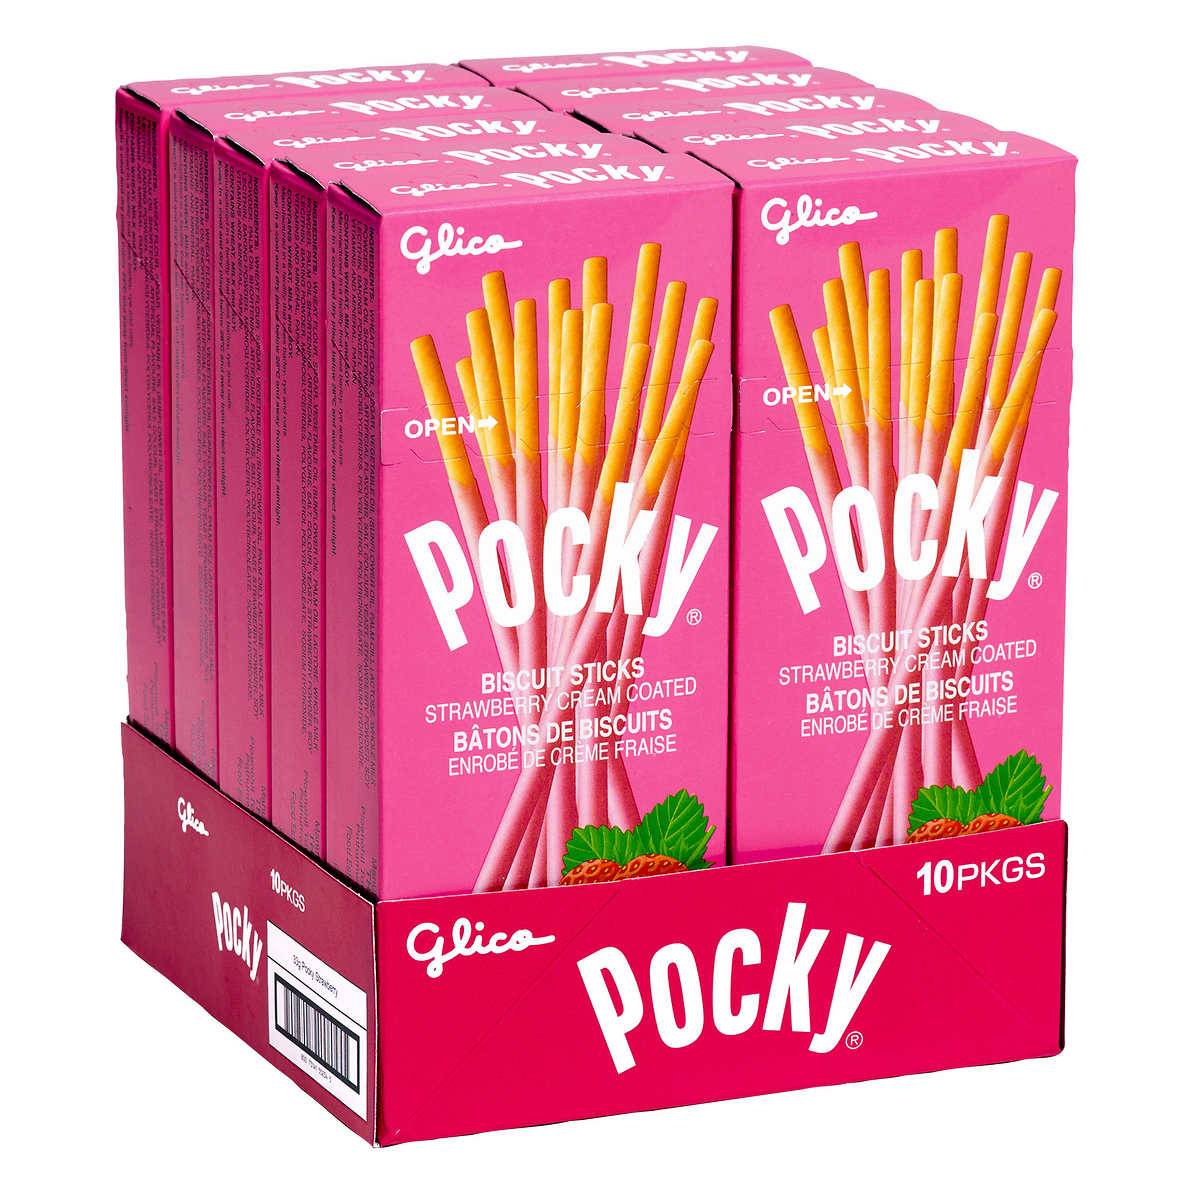 Glico Pocky Strawberry, 10 × 33 g (1.1 oz) Wholesale